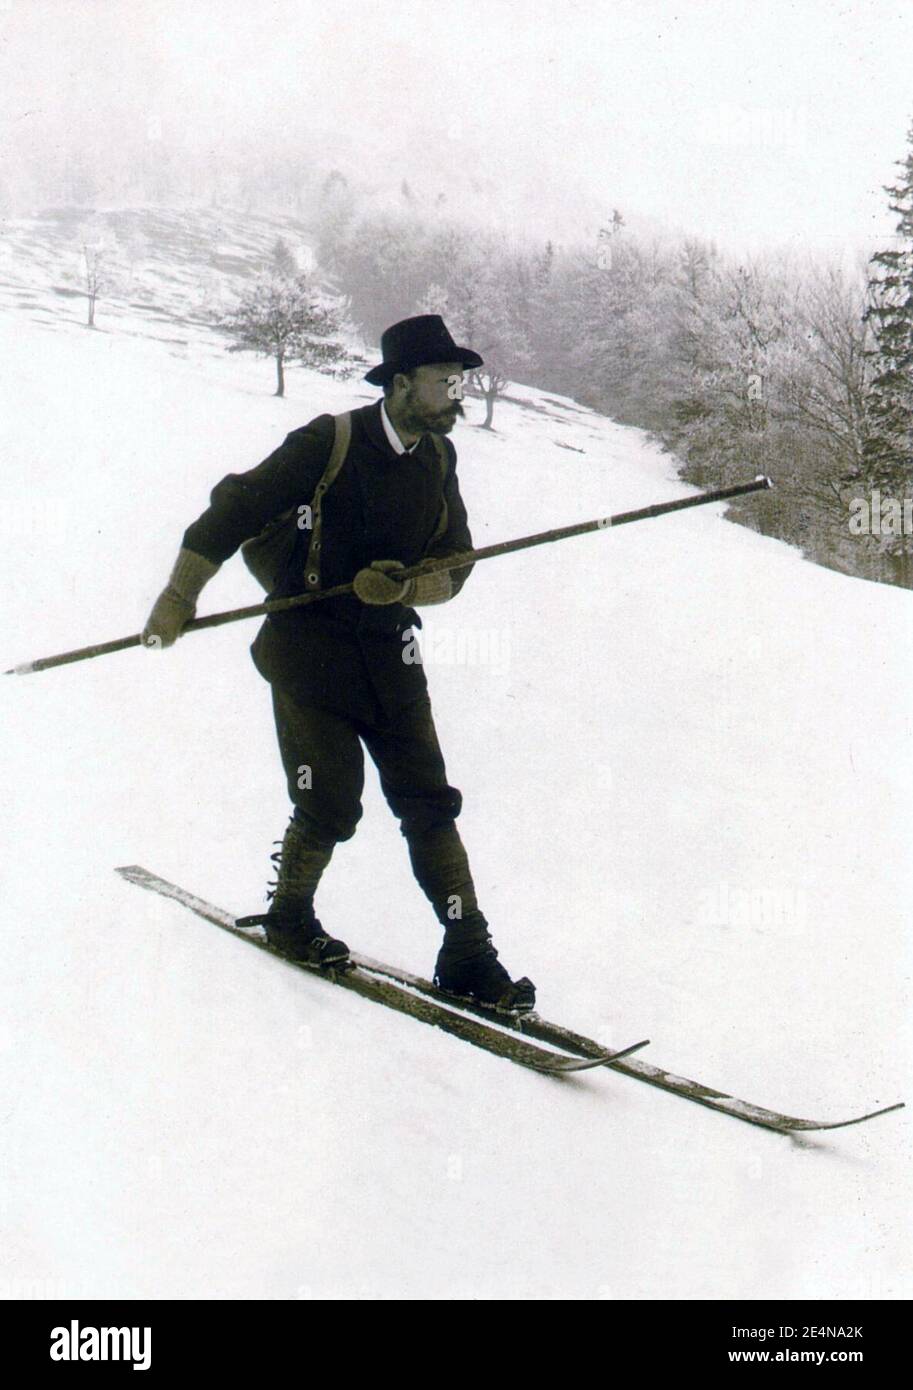 Mathias zdarsky ski technique. Stock Photo